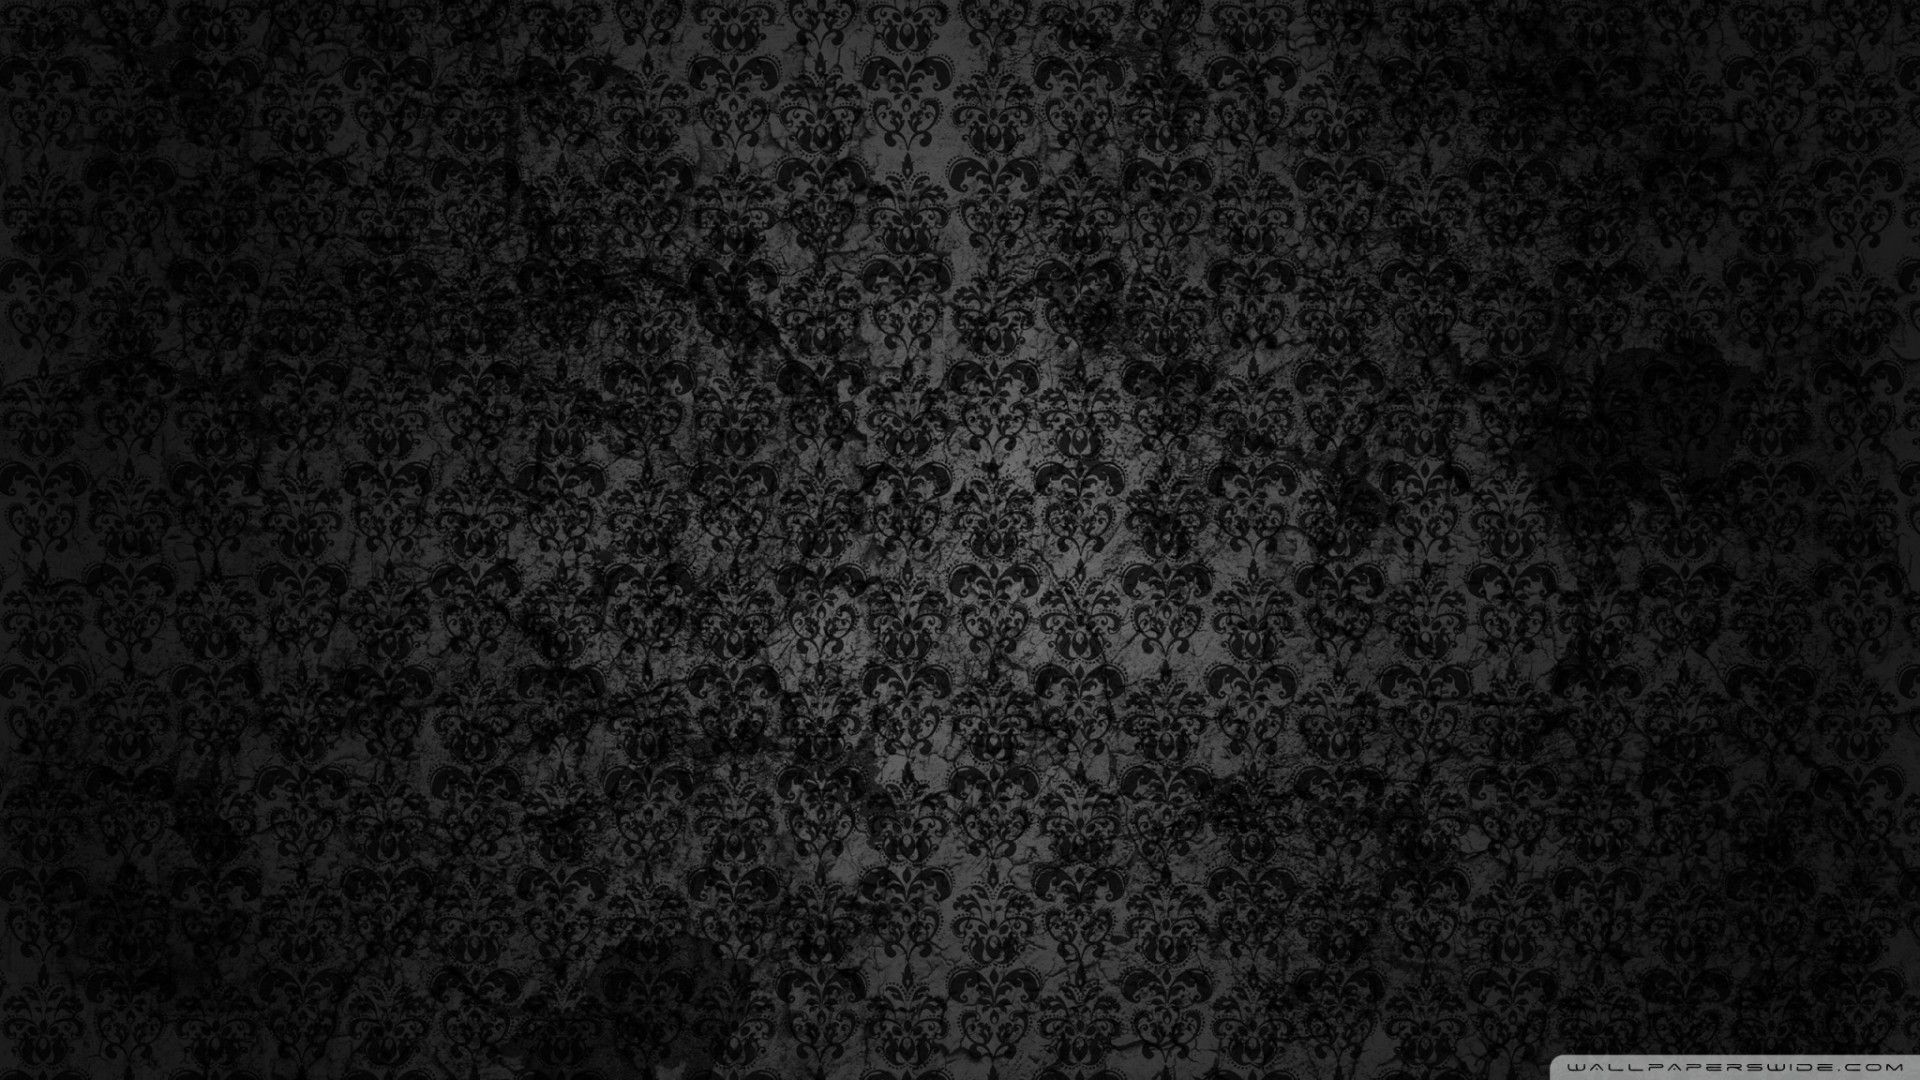 Dark Grunge Desktop Wallpaper 35572